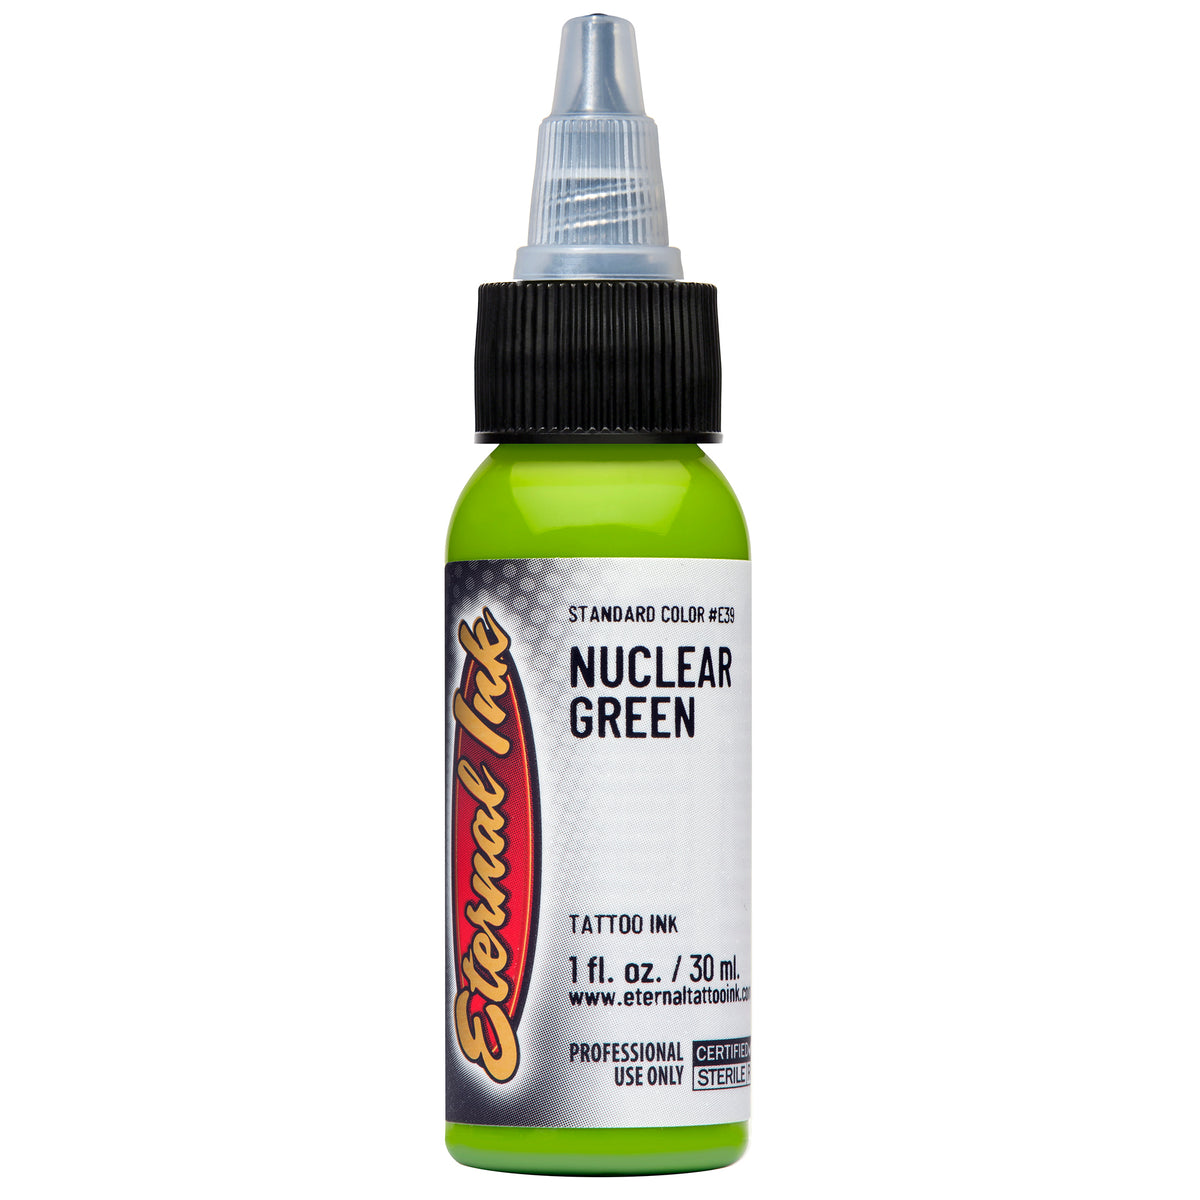 Nuclear Green